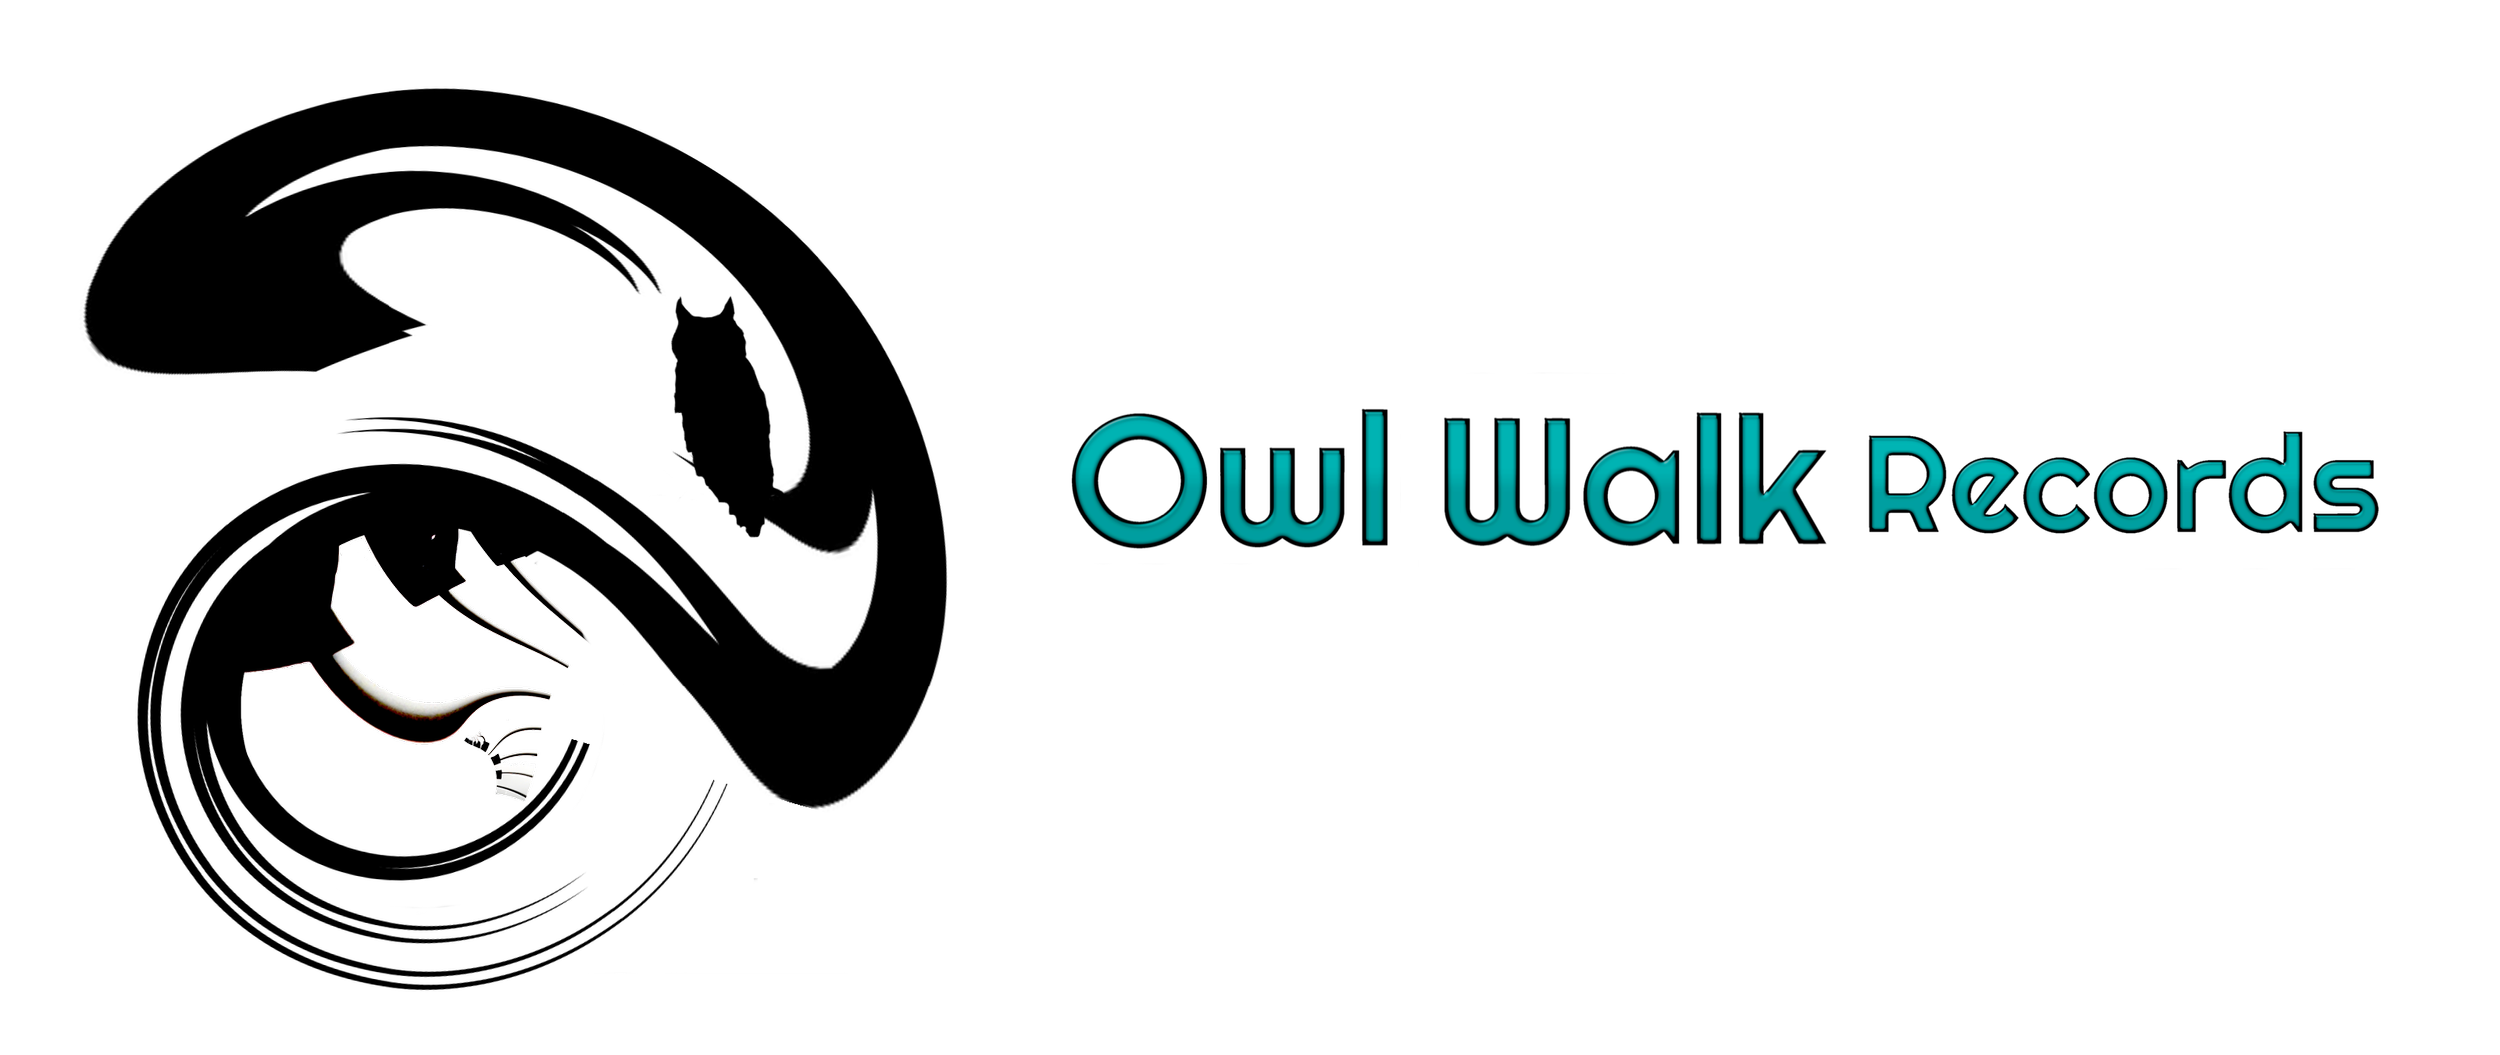 Owl Walk Records